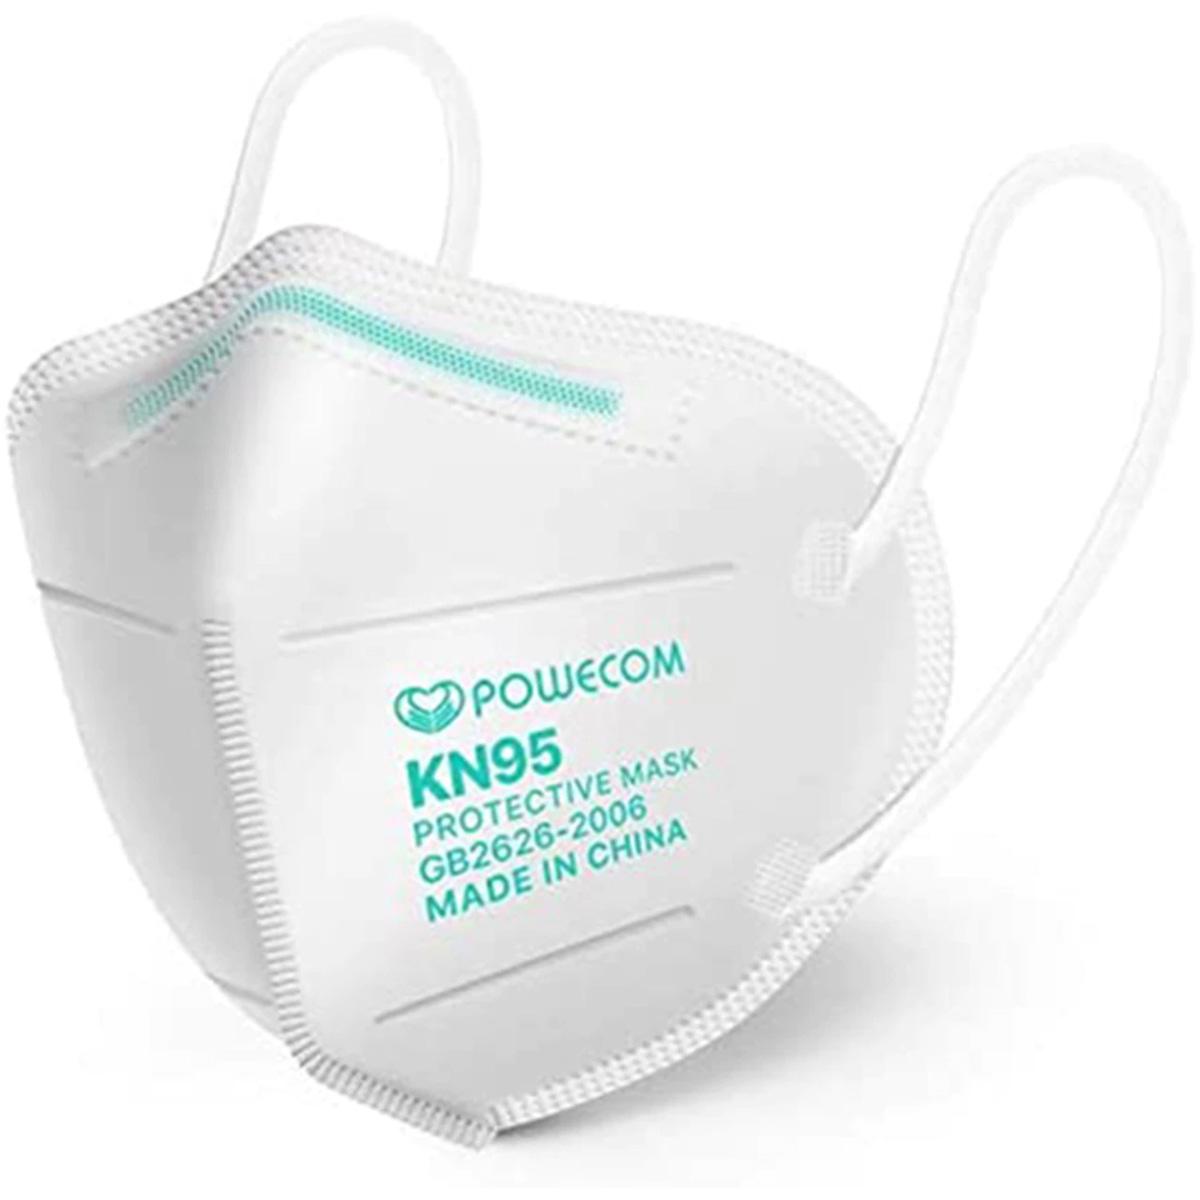 10 Powecom KN95 FDA Authorized Respirator Ear Loop Mask for $10 Shipped